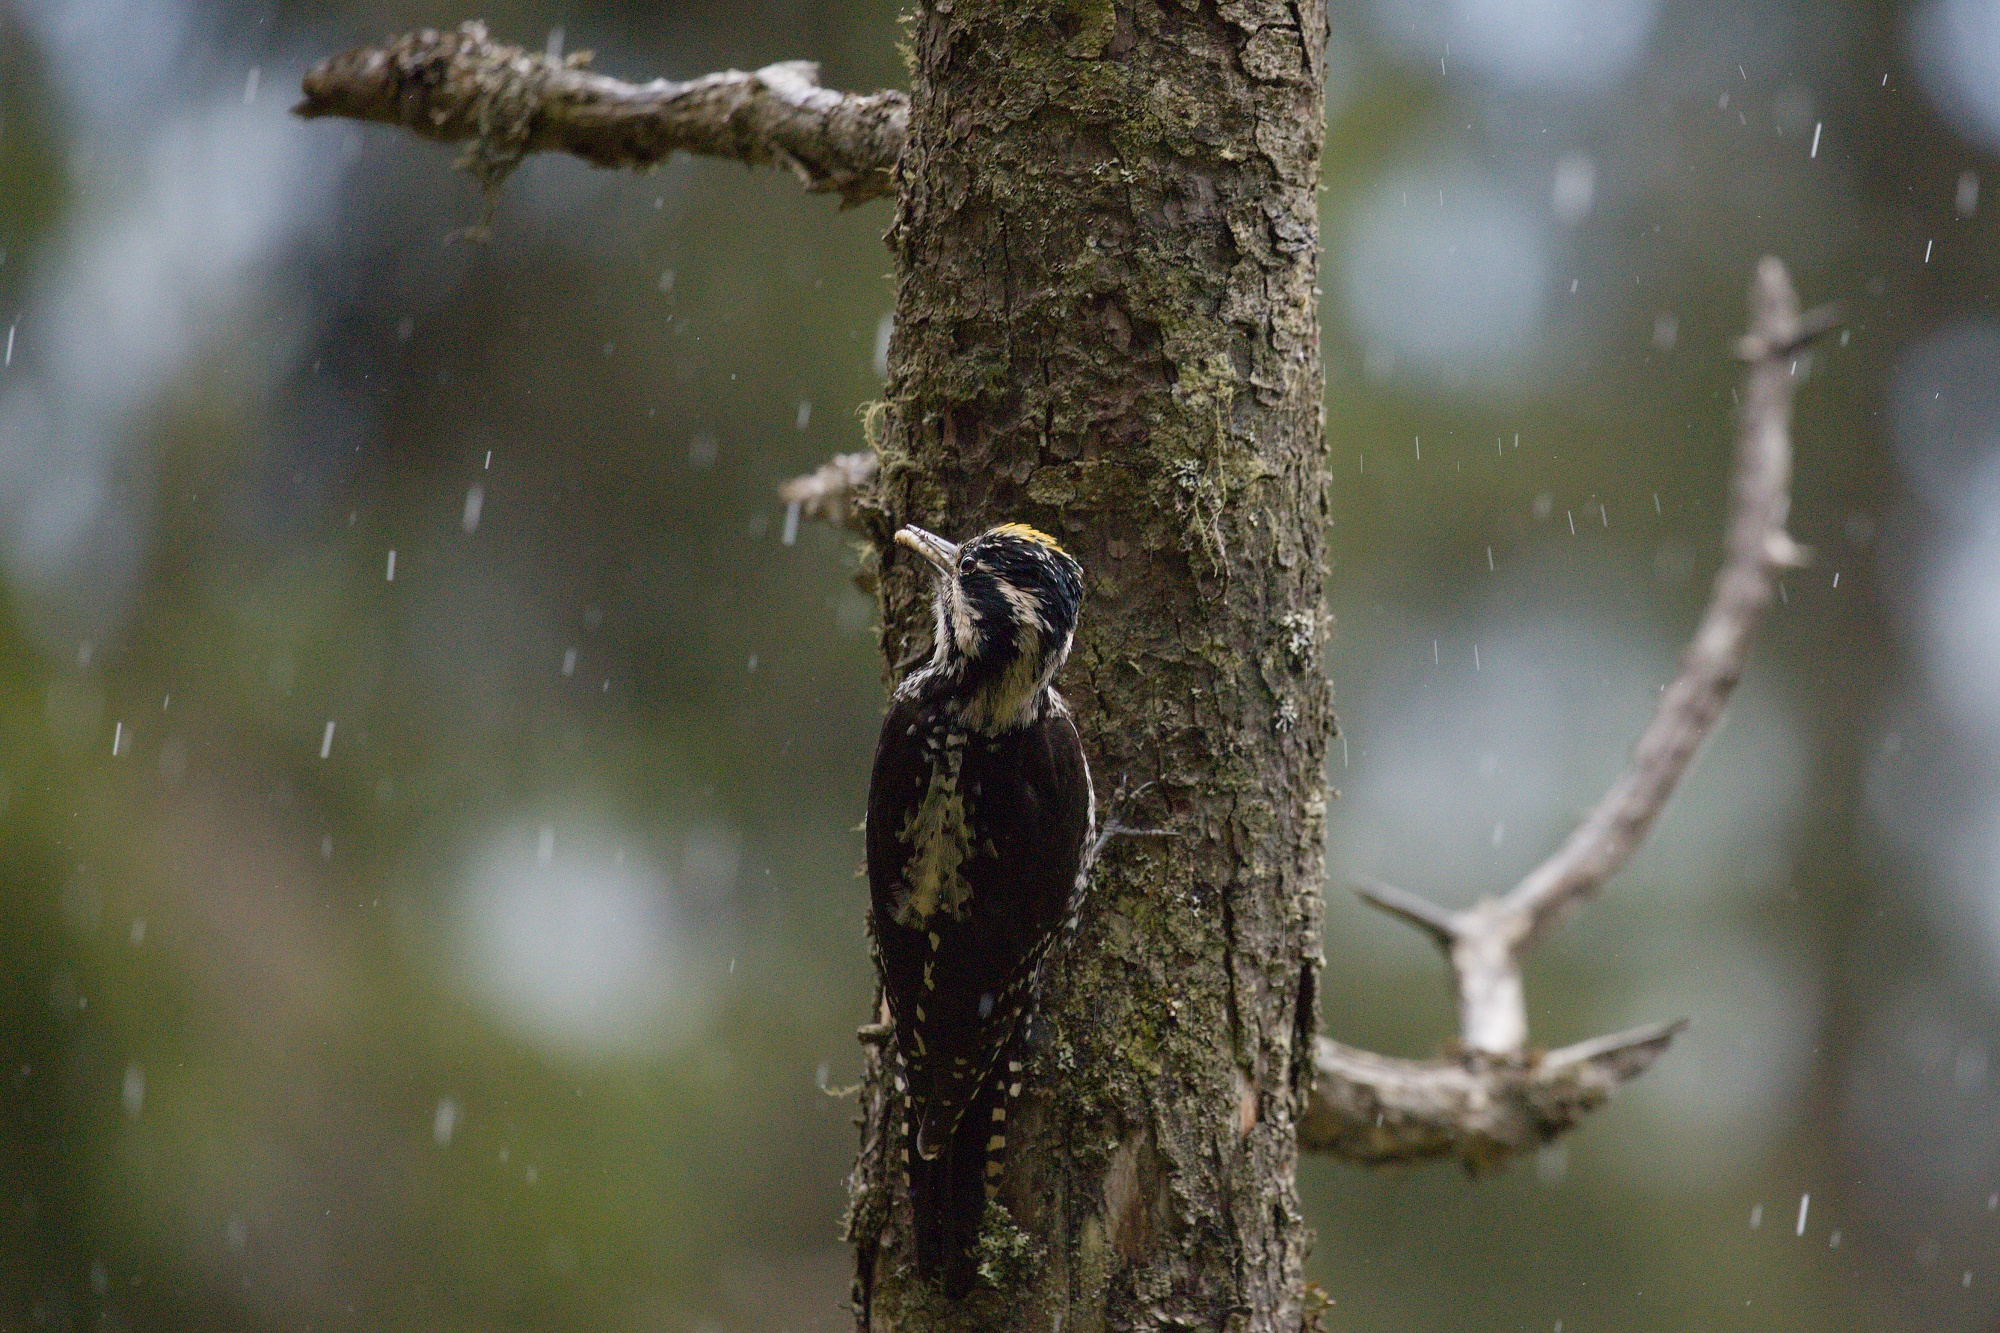 ďubník trojprstý (Picoides tridactylus) Three-toed woodpecker, Parcul National Calimani, Romania Canon EOS 6d mark II + Canon 100-400 f4.5-5.6 L IS II USM, 400mm, 1/640, f5.6, ISO 2000, 15. jún 2021